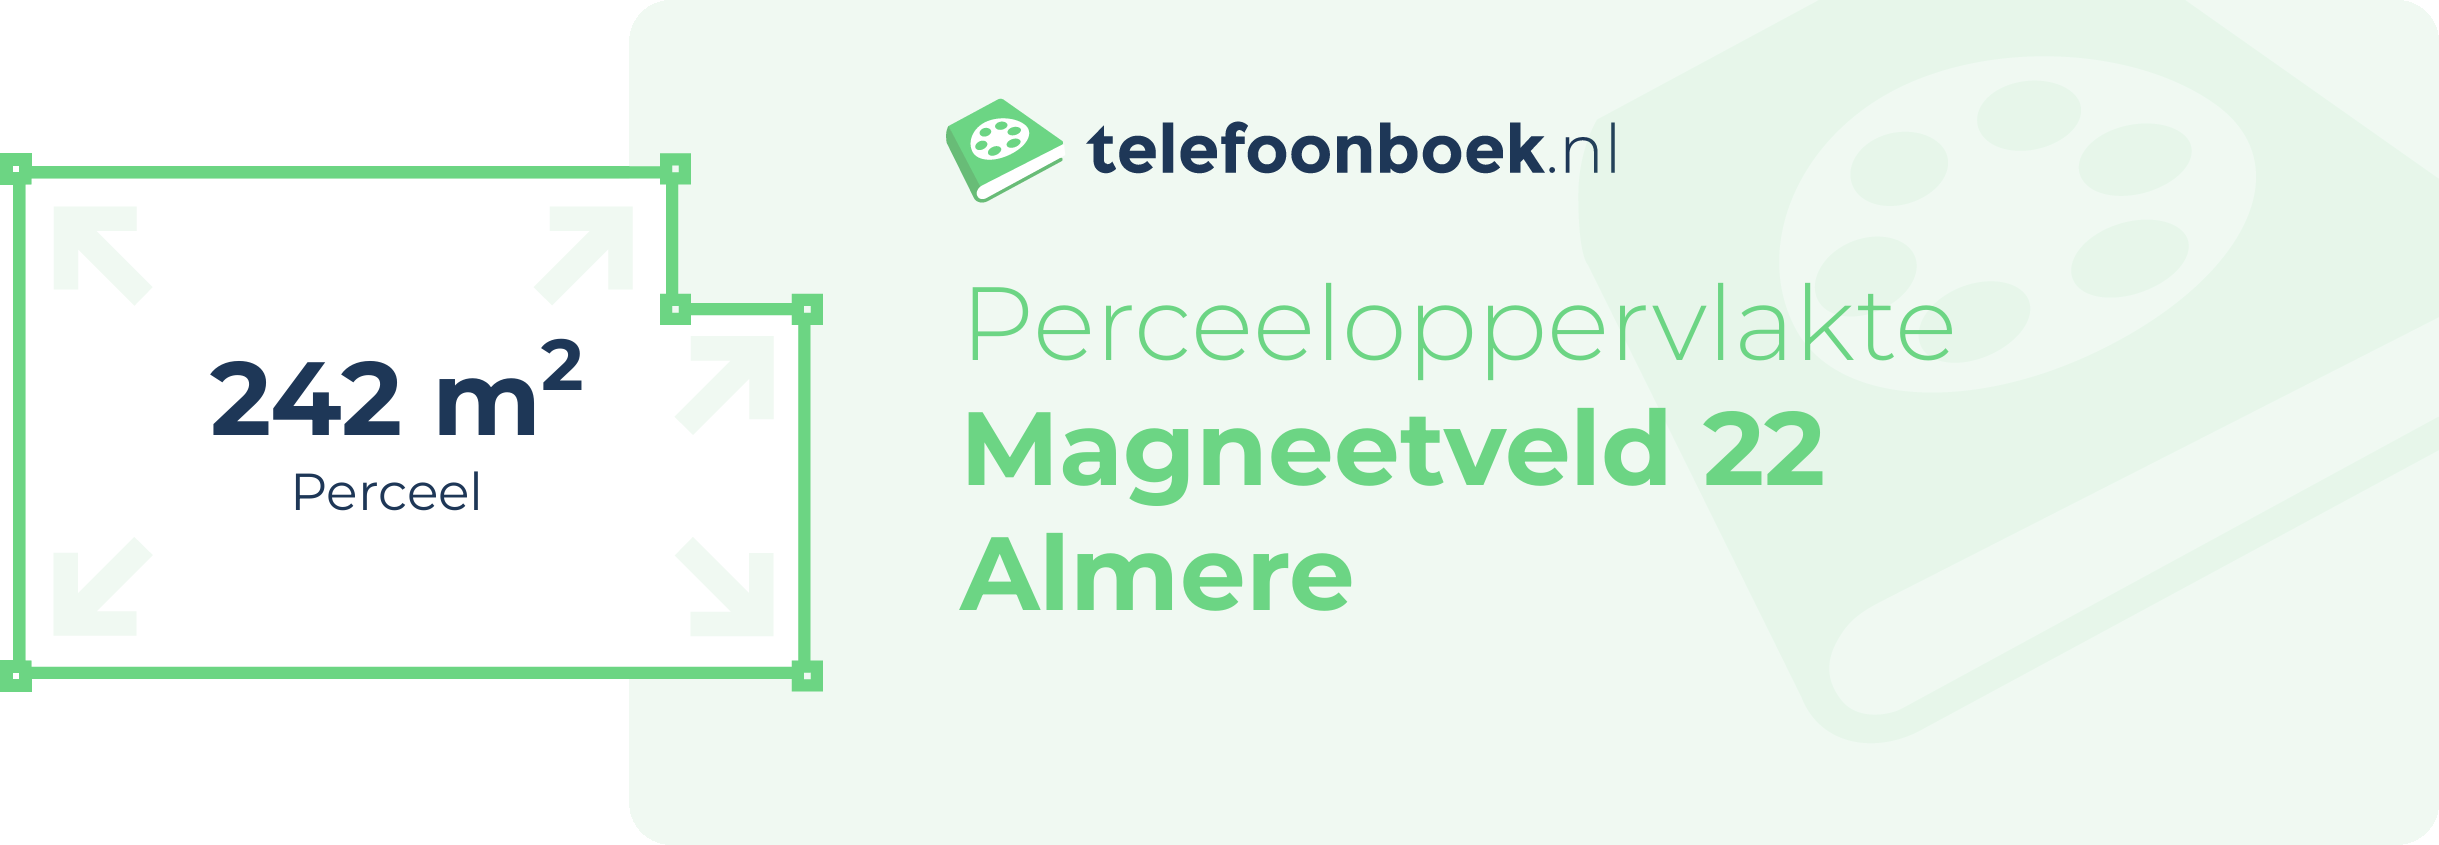 Perceeloppervlakte Magneetveld 22 Almere